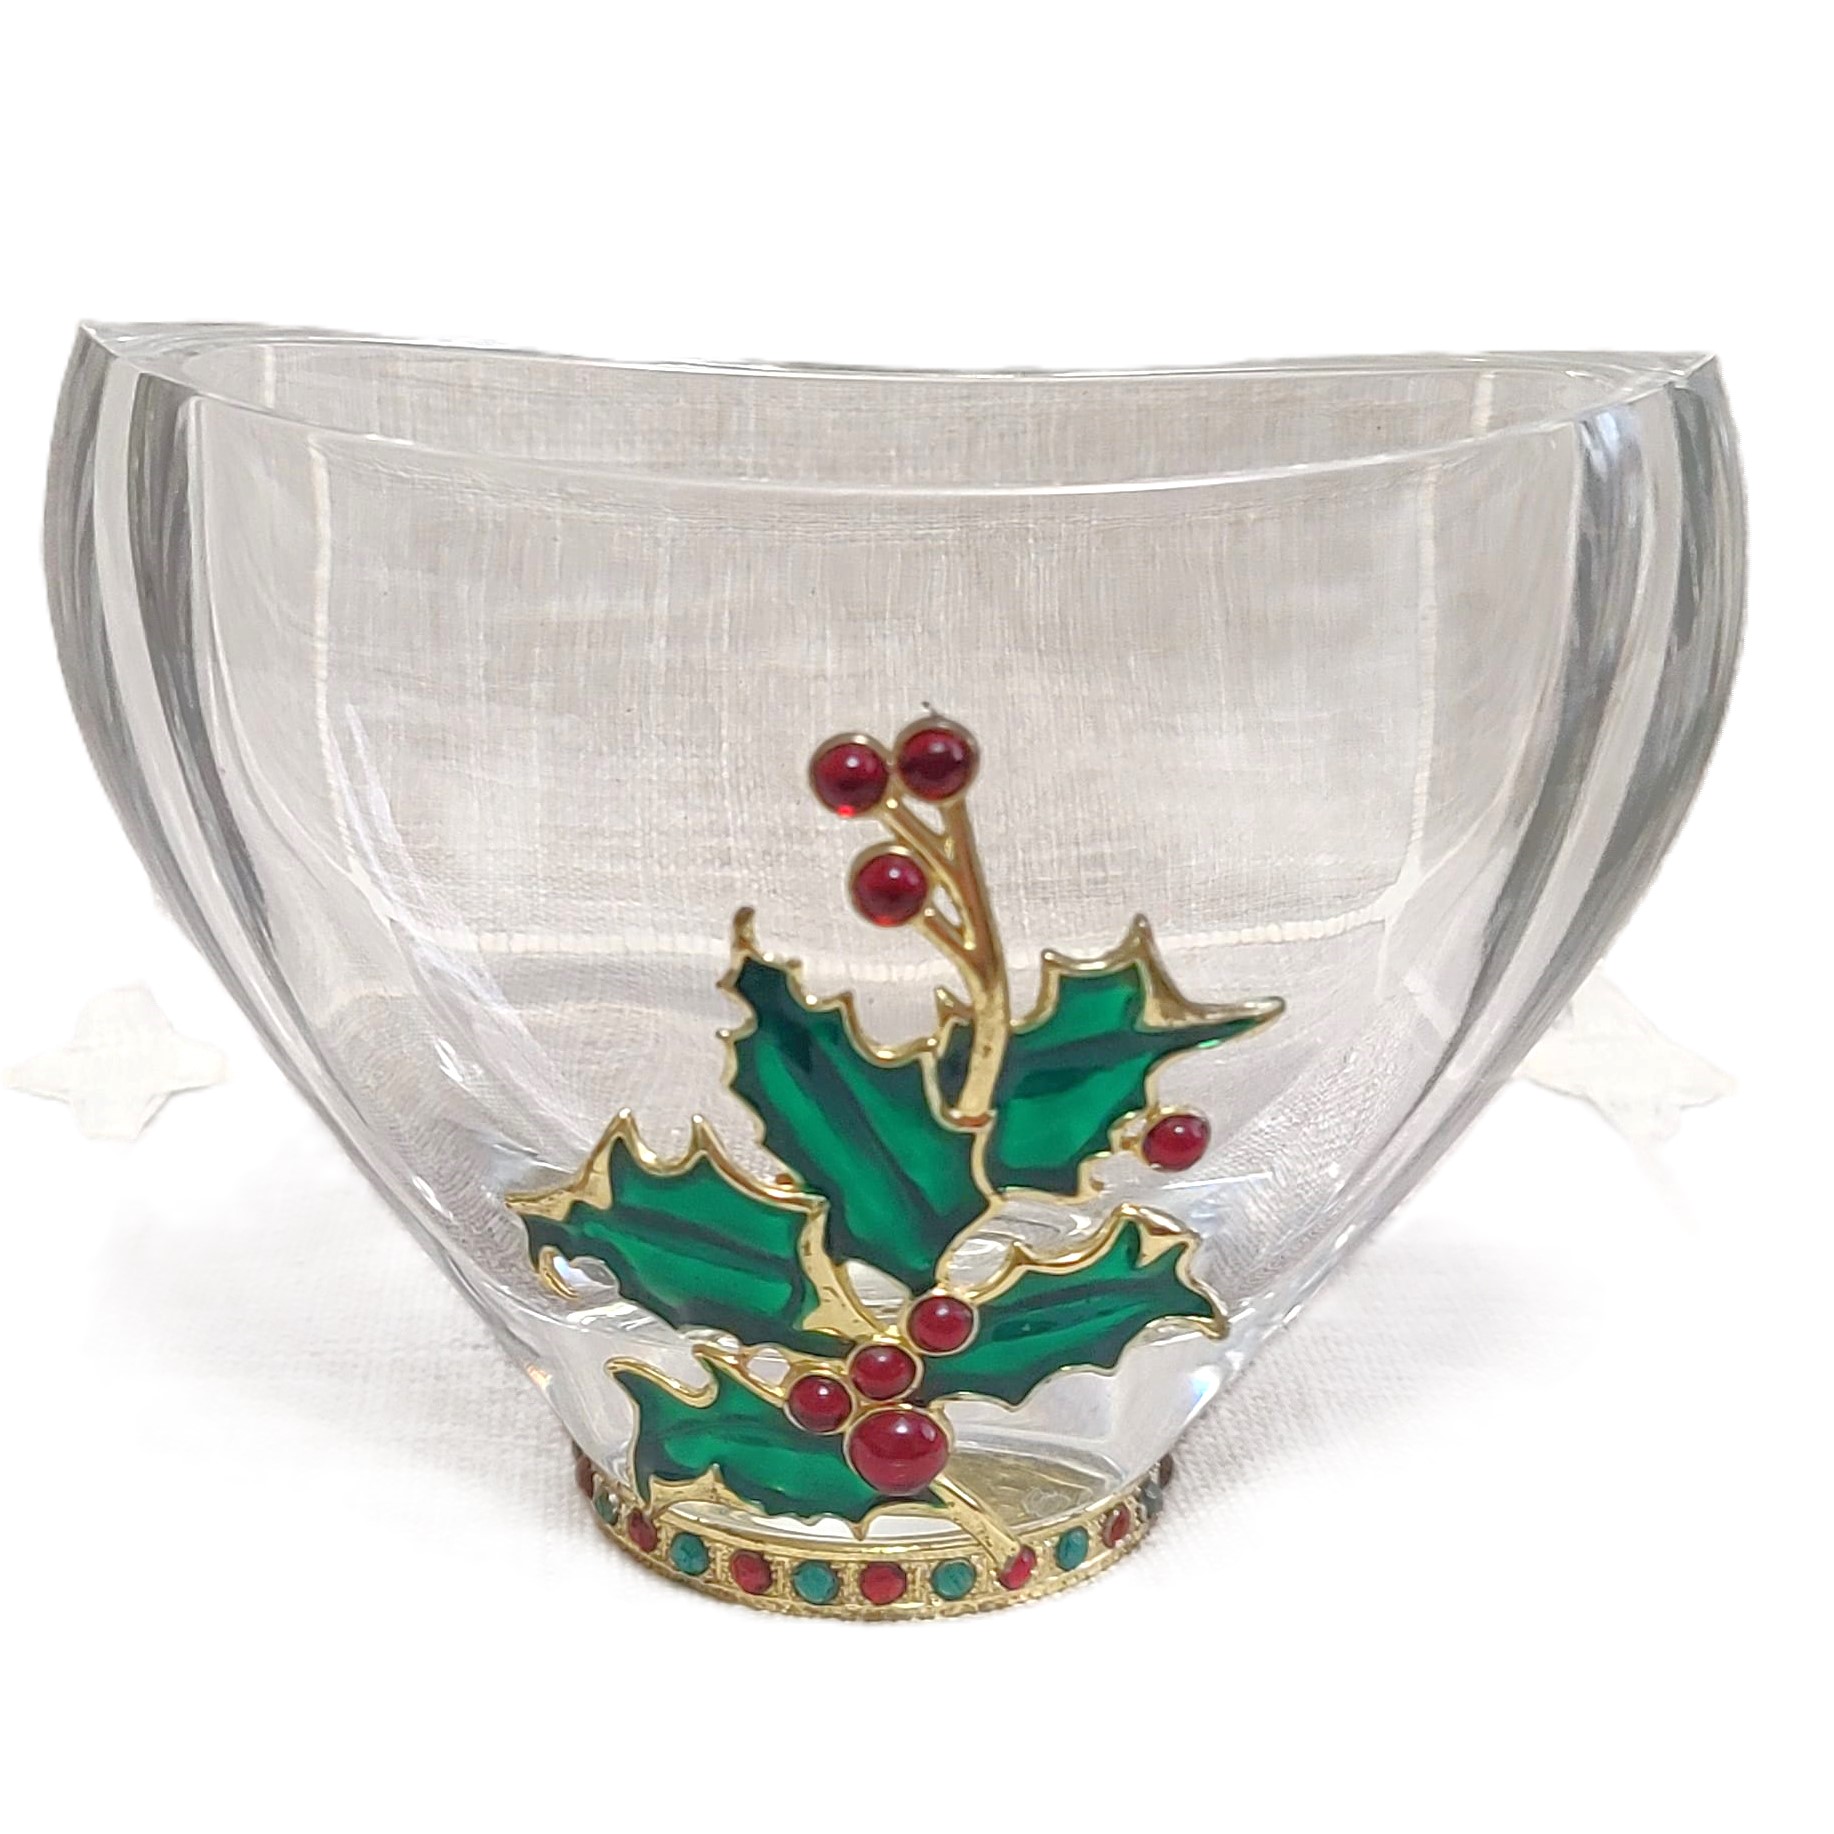 Teleflora Lead Crystal Candy Bowl Vase 24% Bohemian Crystal - Click Image to Close